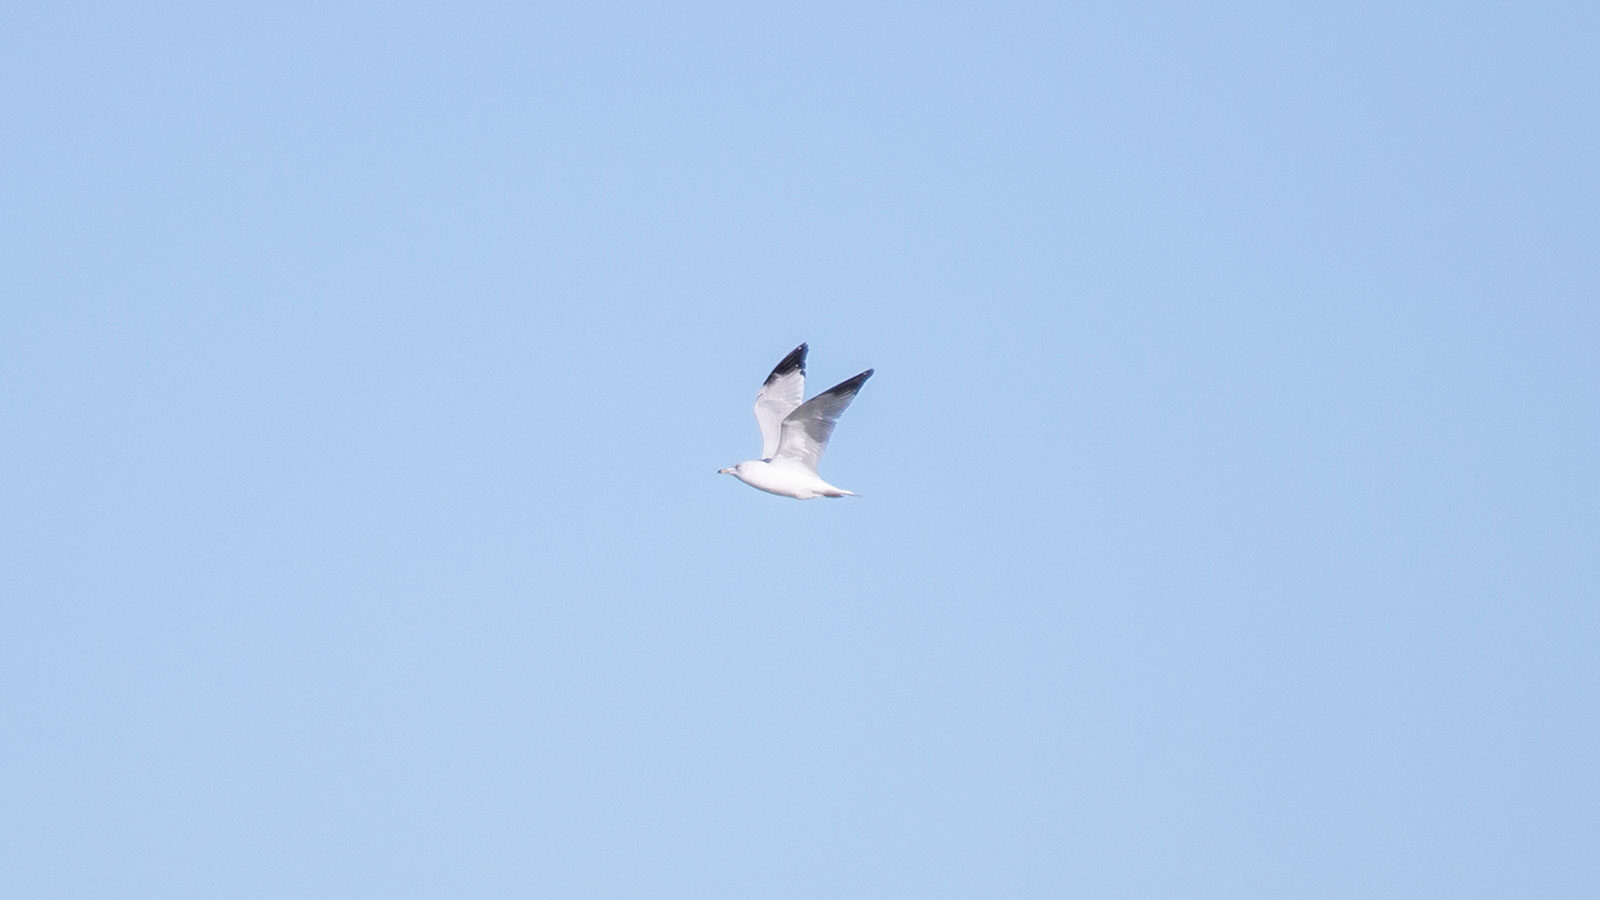 Ring-billed gull in flight through a blue sky